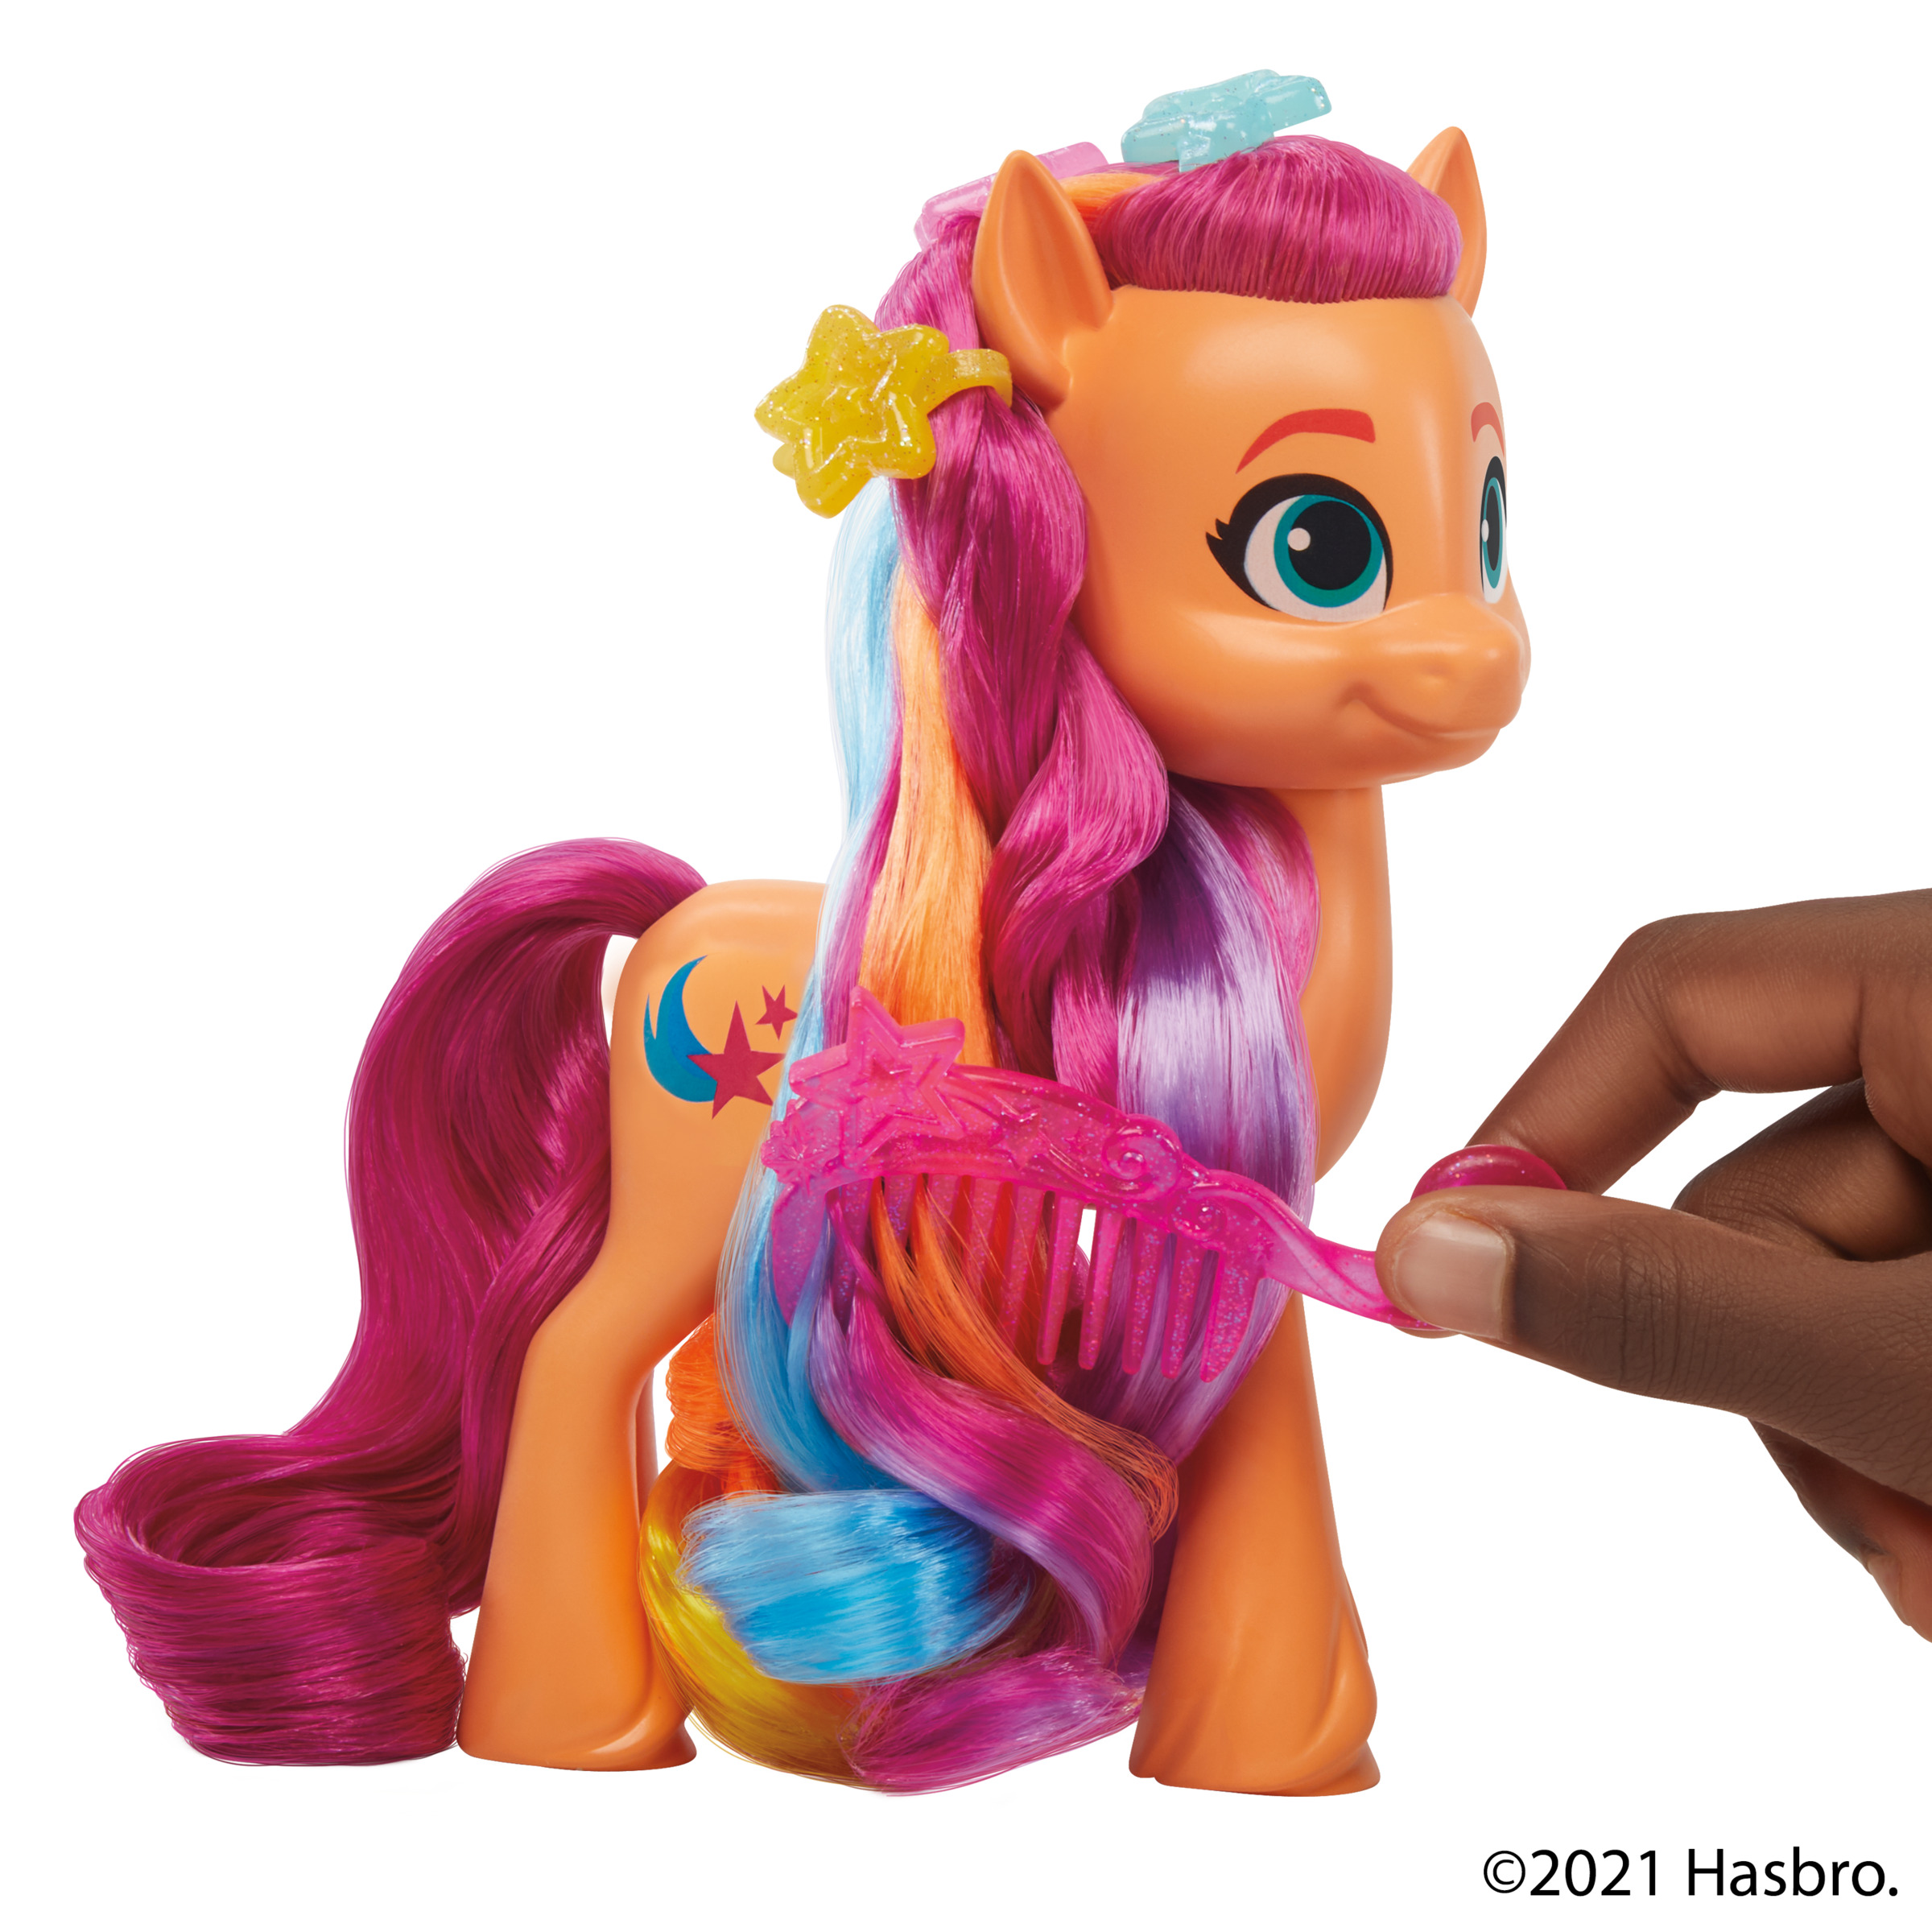 MY LITTLE PONY My Little - A Generation Figura New Starscout Pony: Sunny mágicos Peinados